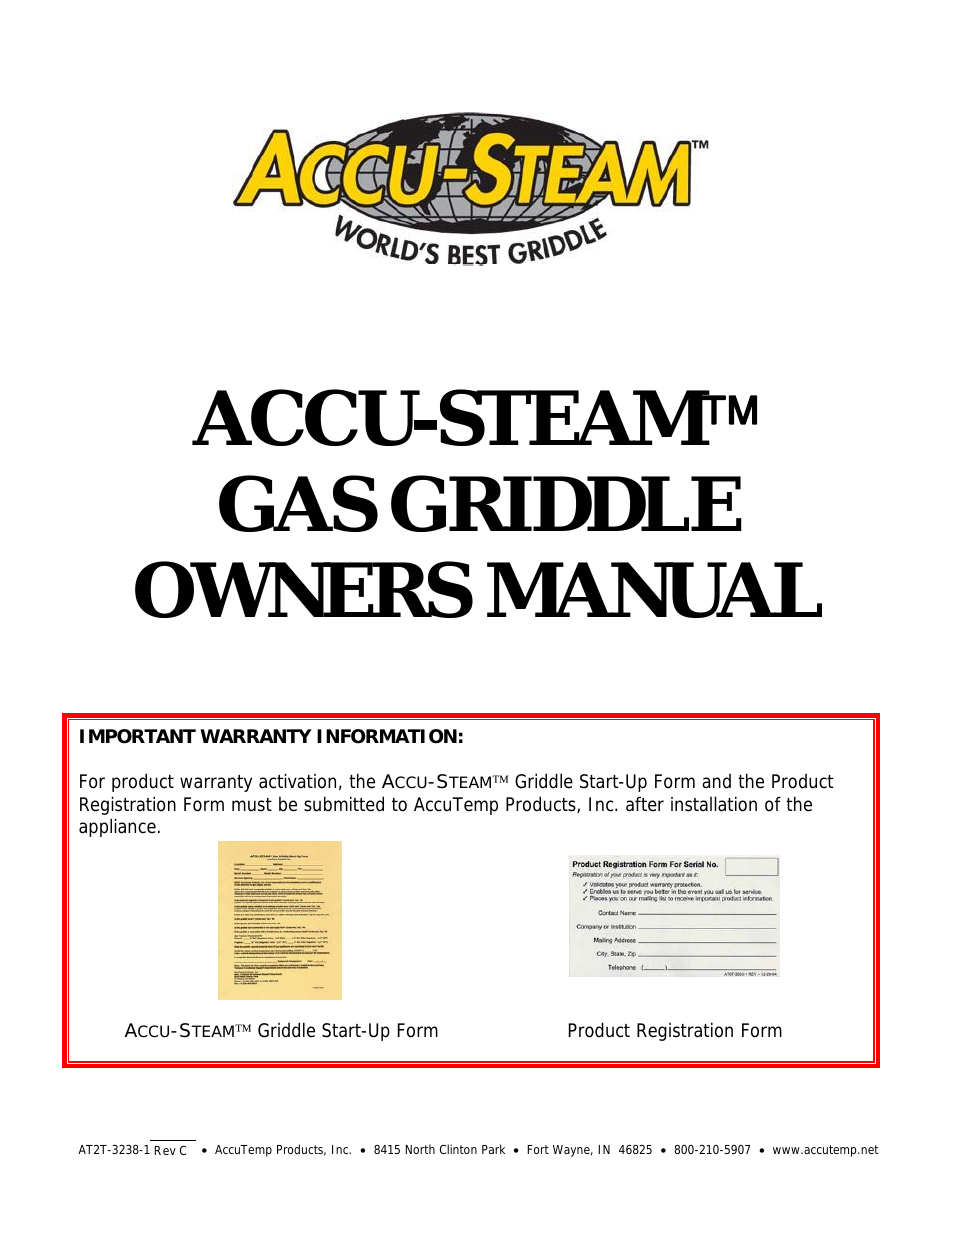 ACCU-STEAM GAS GRIDDLE